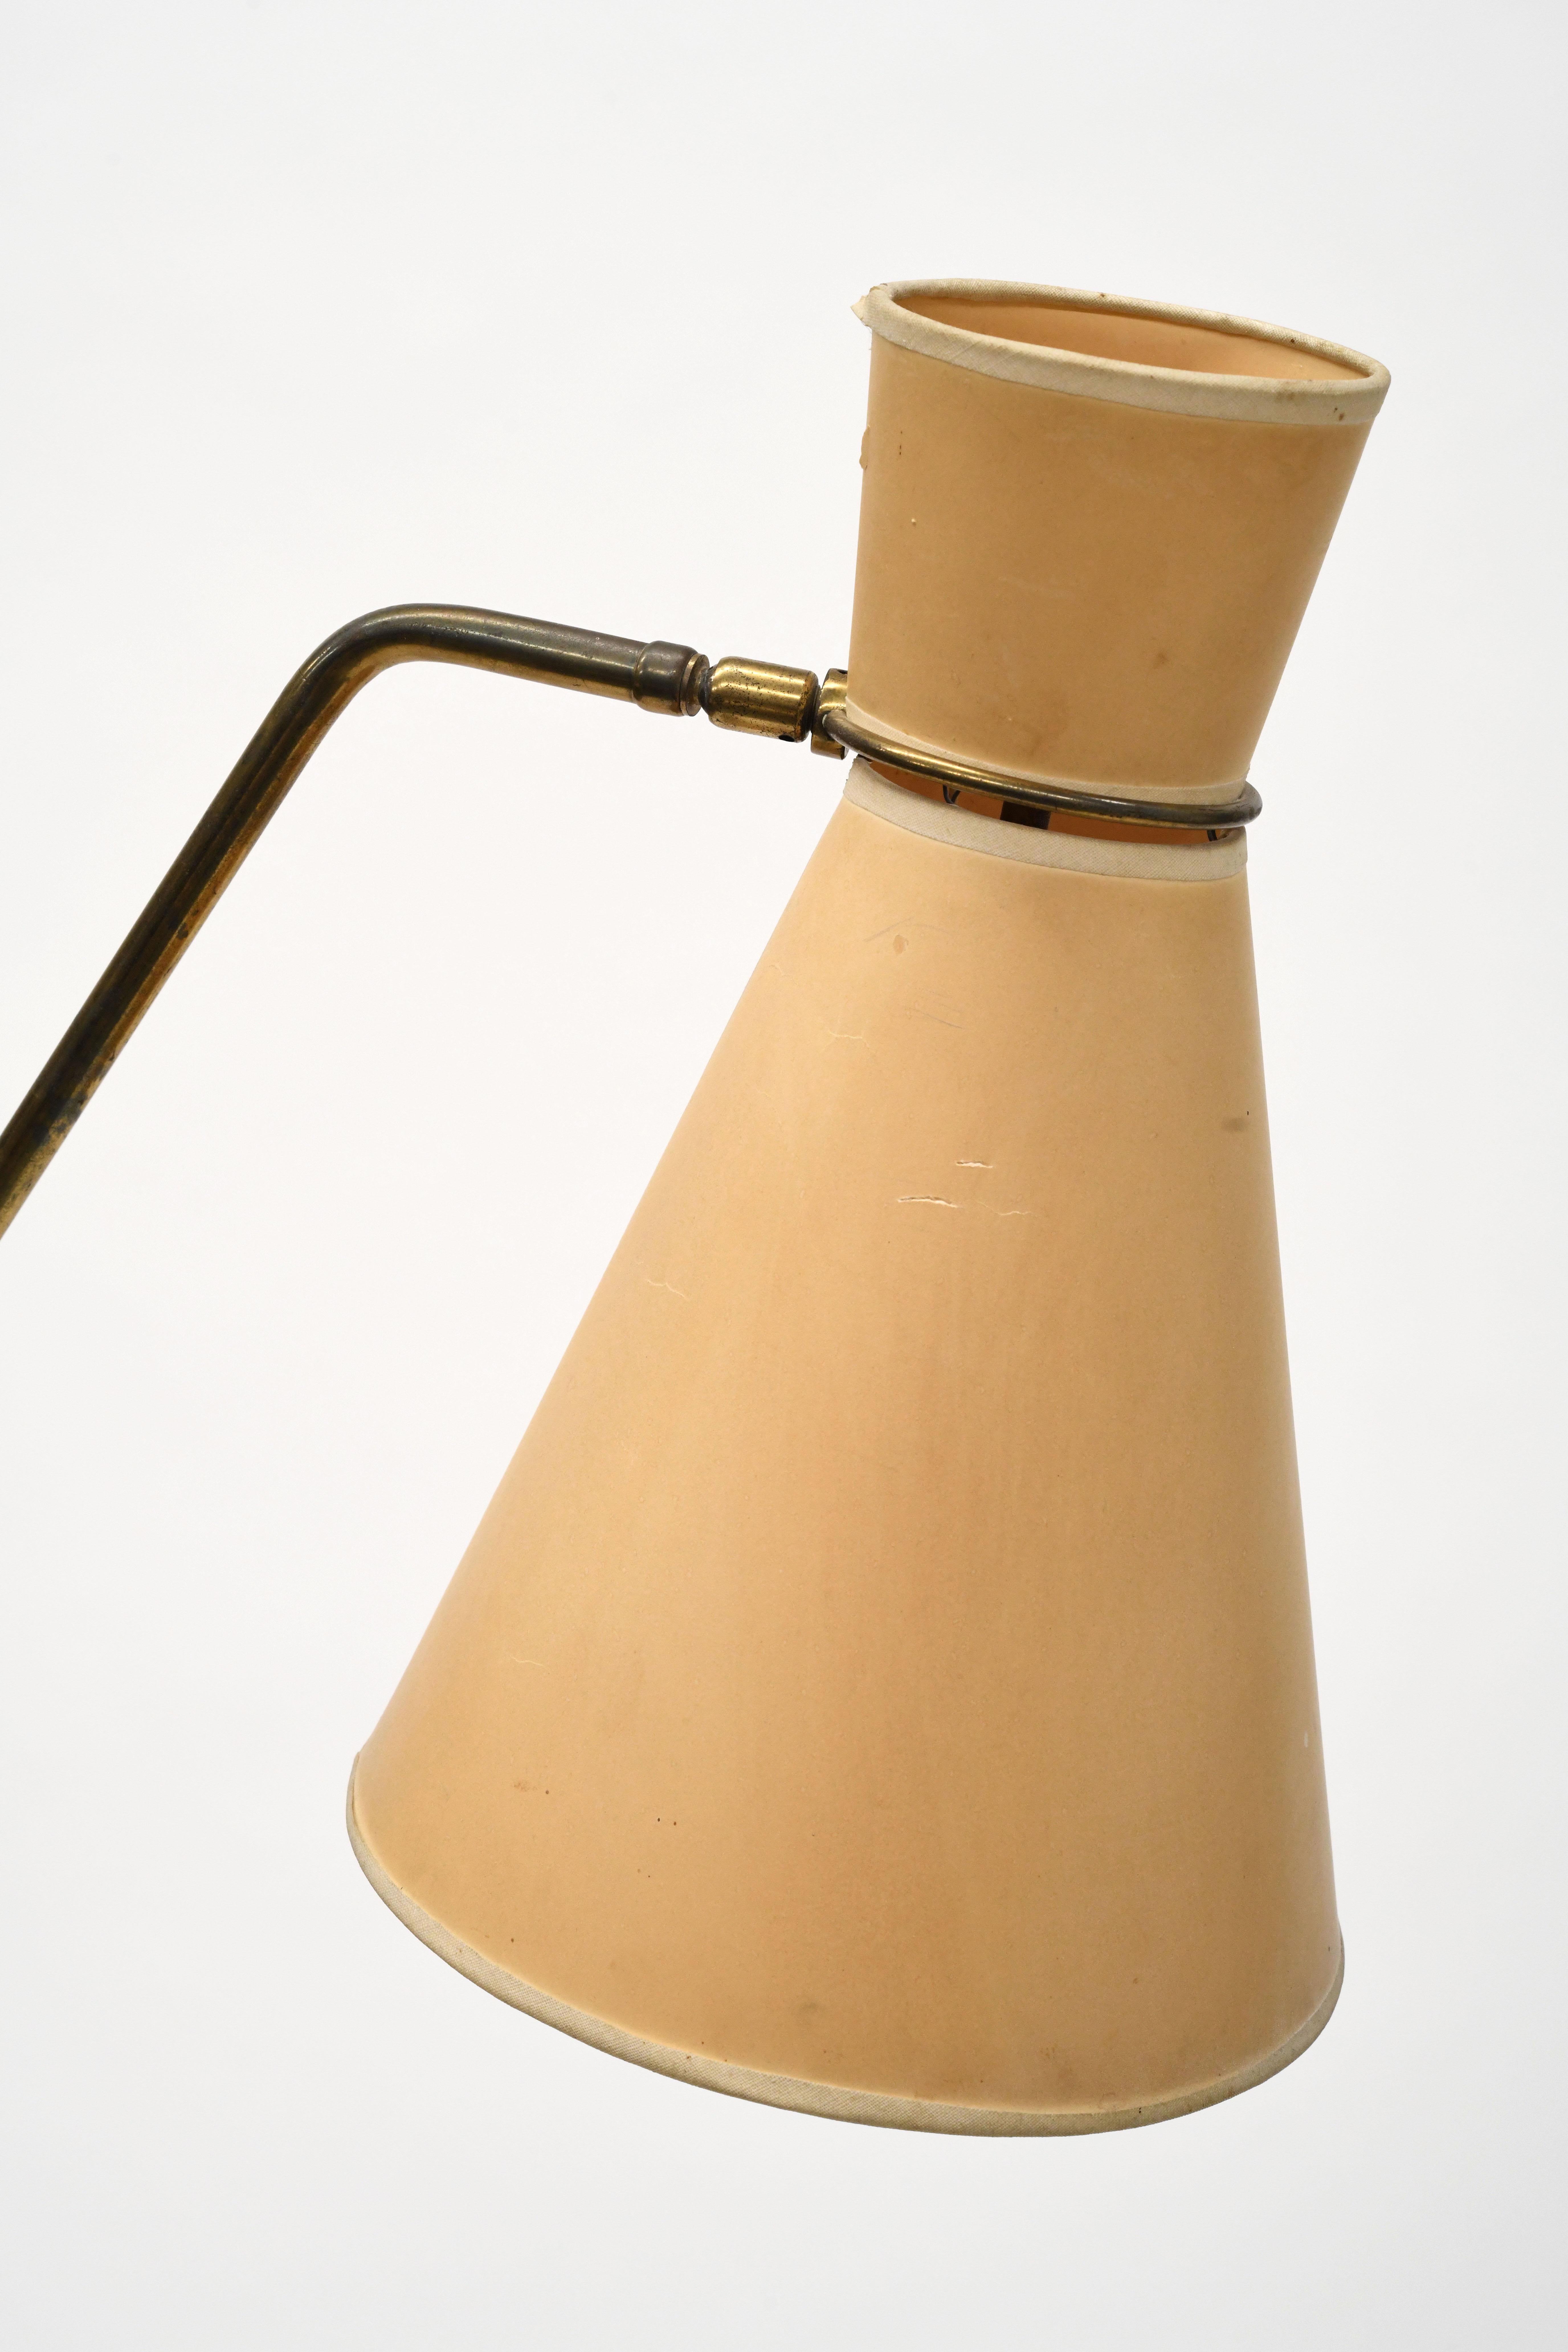 Pierre Guariche Equilibrium French Modern Floor Lamp 3